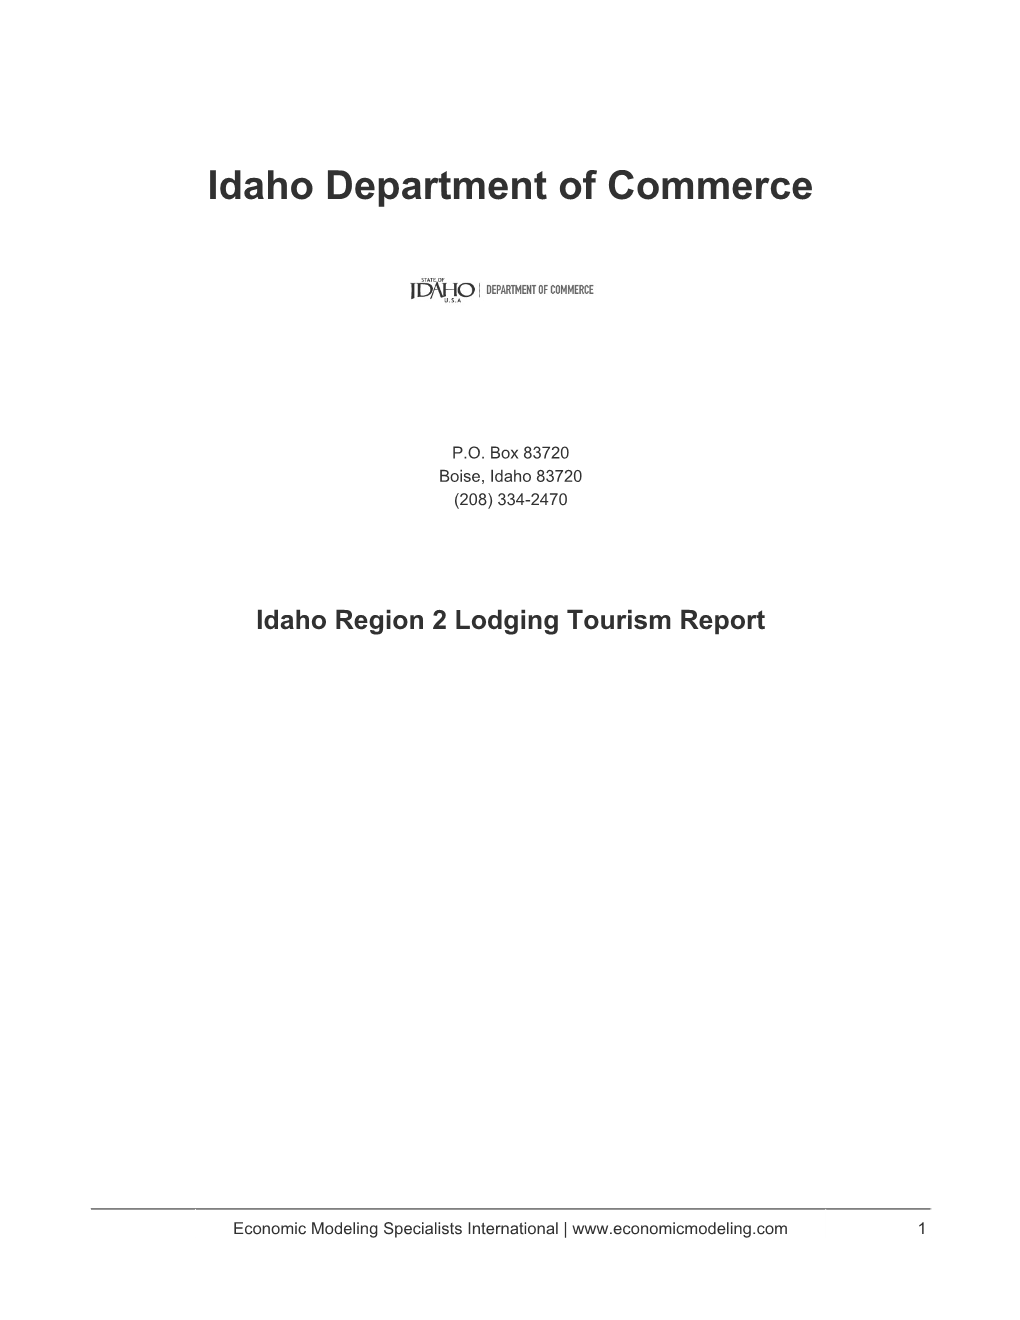 Idaho Region 2 Lodging Tourism Report